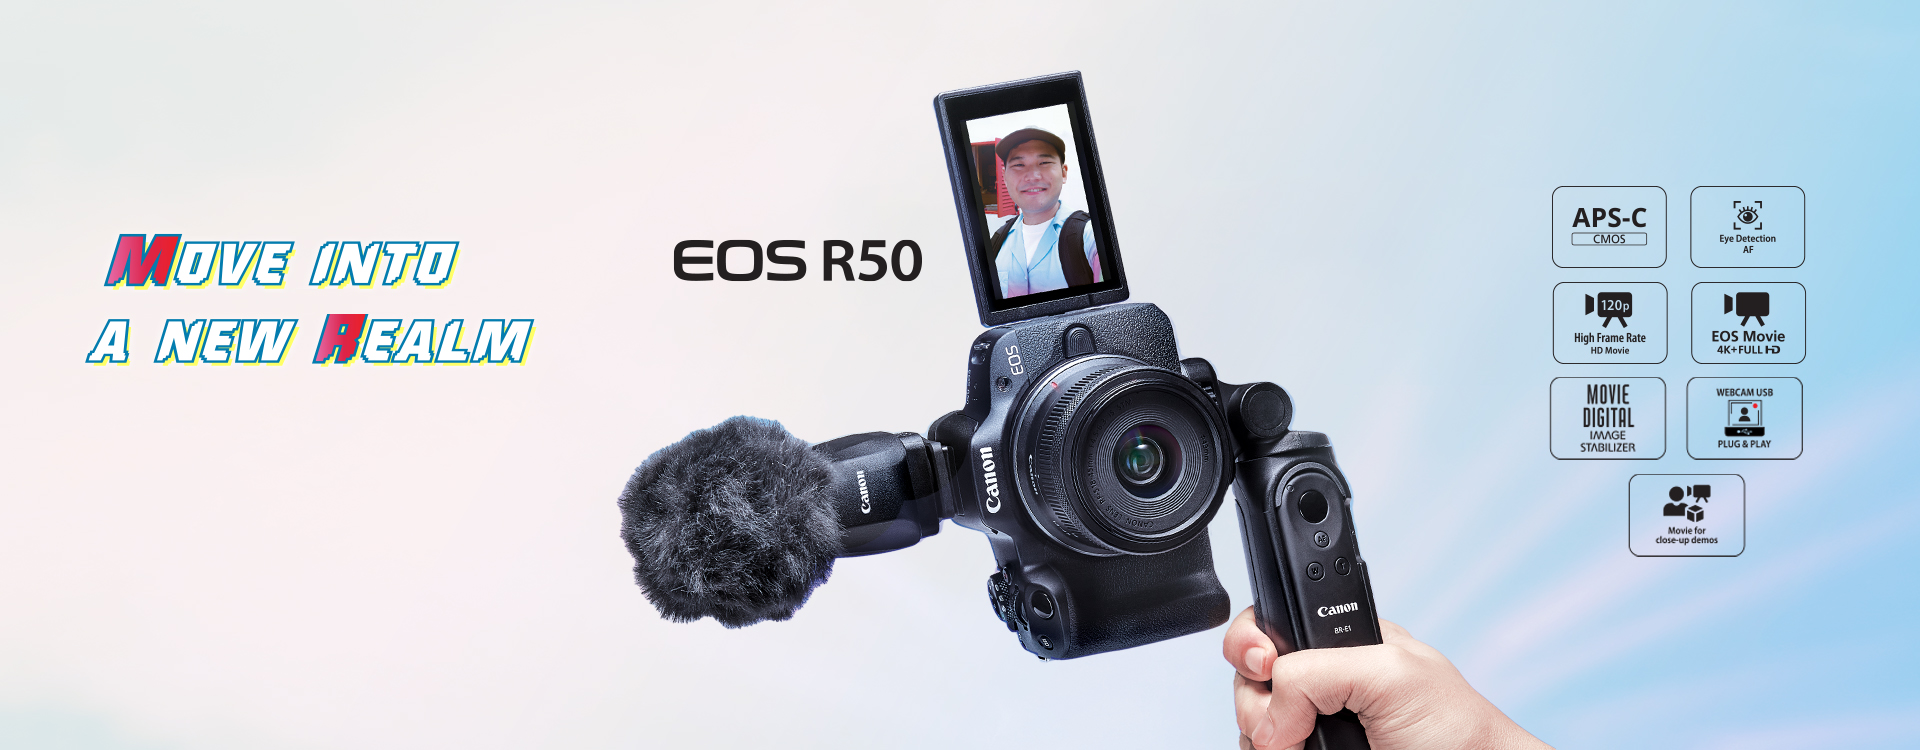 EOS R50.jpg